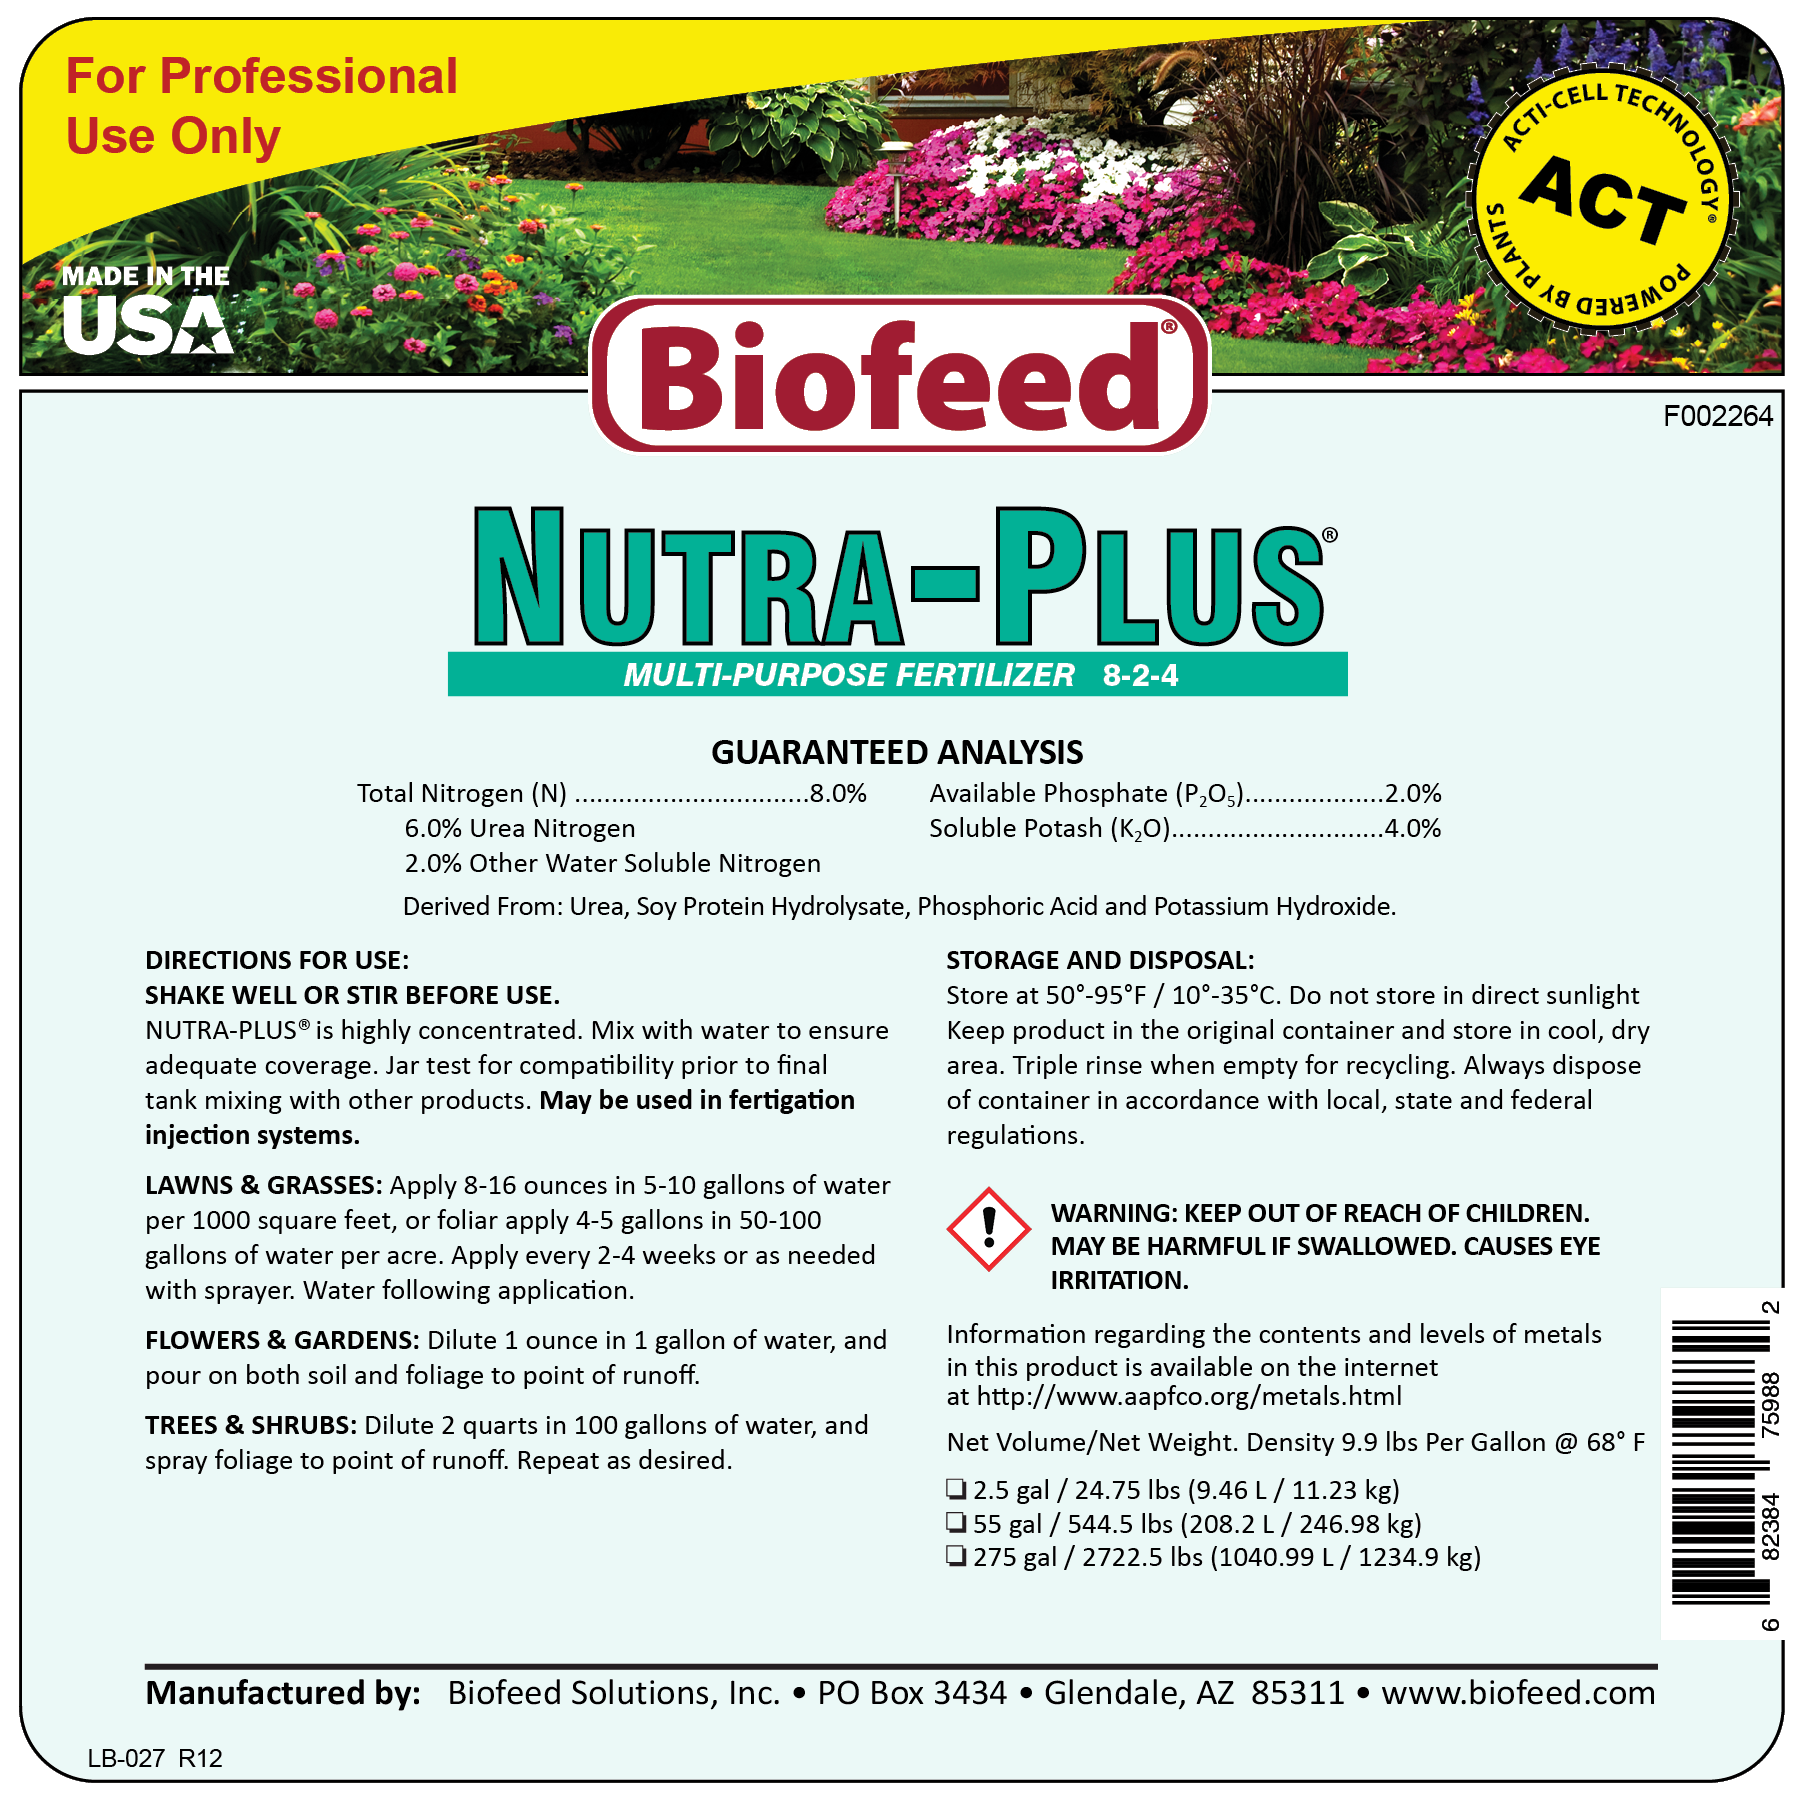 Nutra-Plus Multi-Purpose Fertilizer